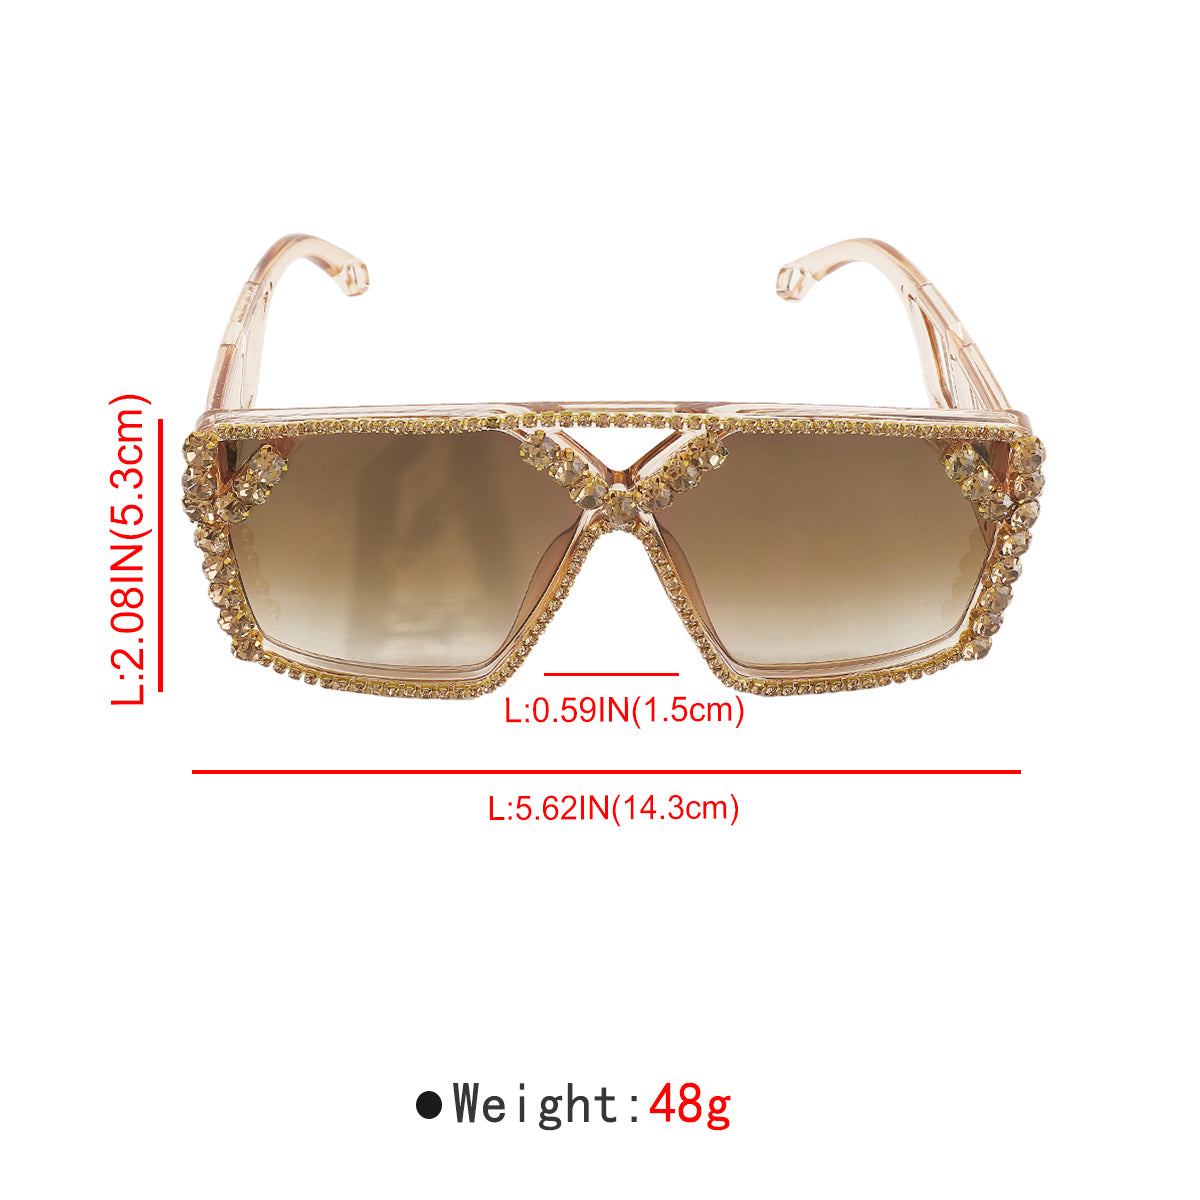 GL042 Crystal Oversized Square Sunglasses